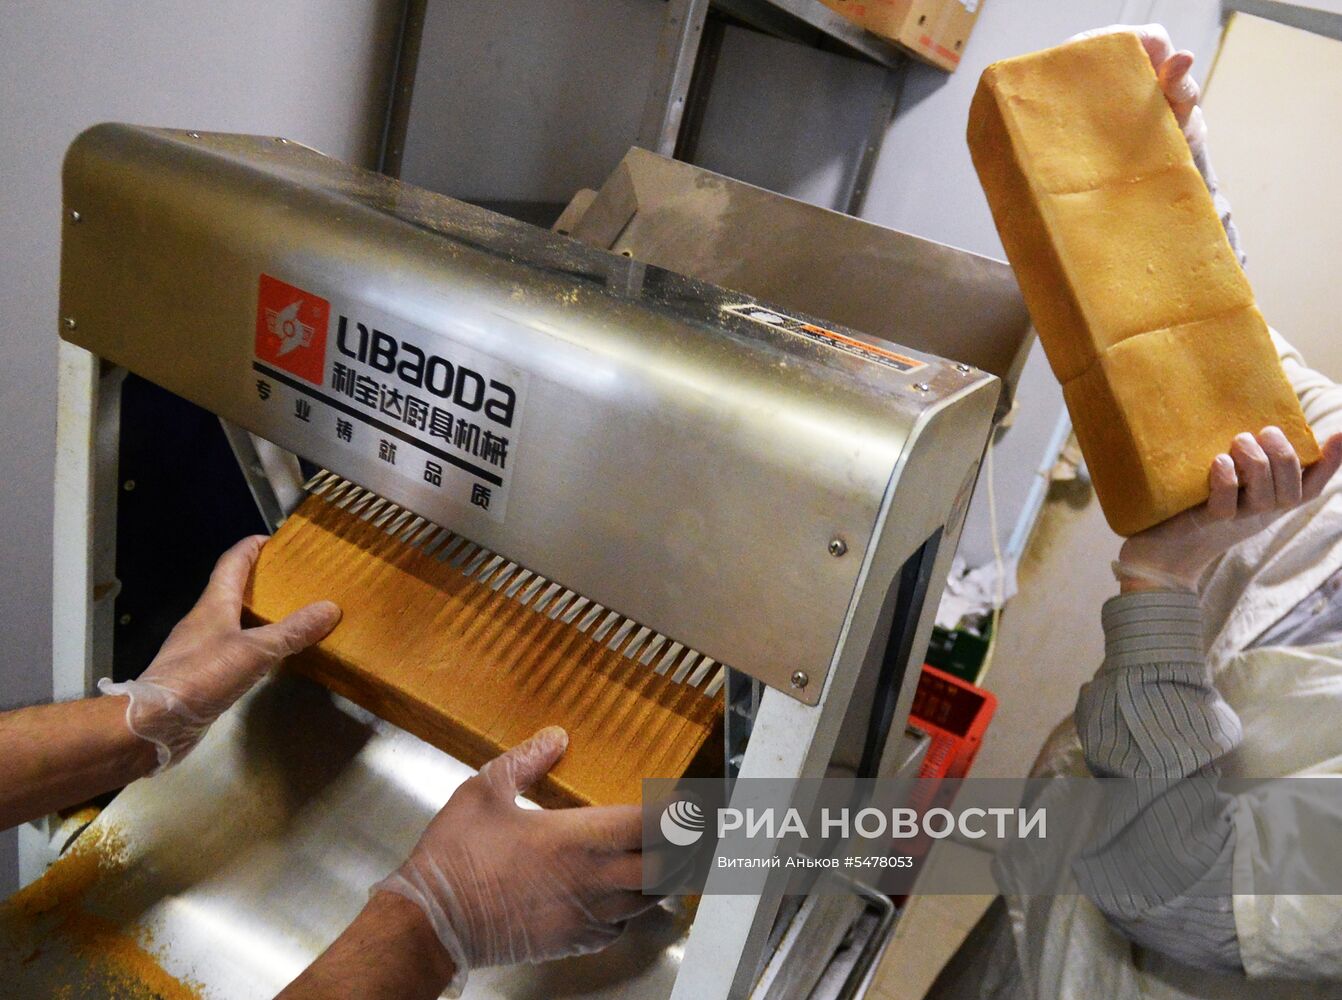 Работа пекарни "Хлебное Дело" во Владивостоке